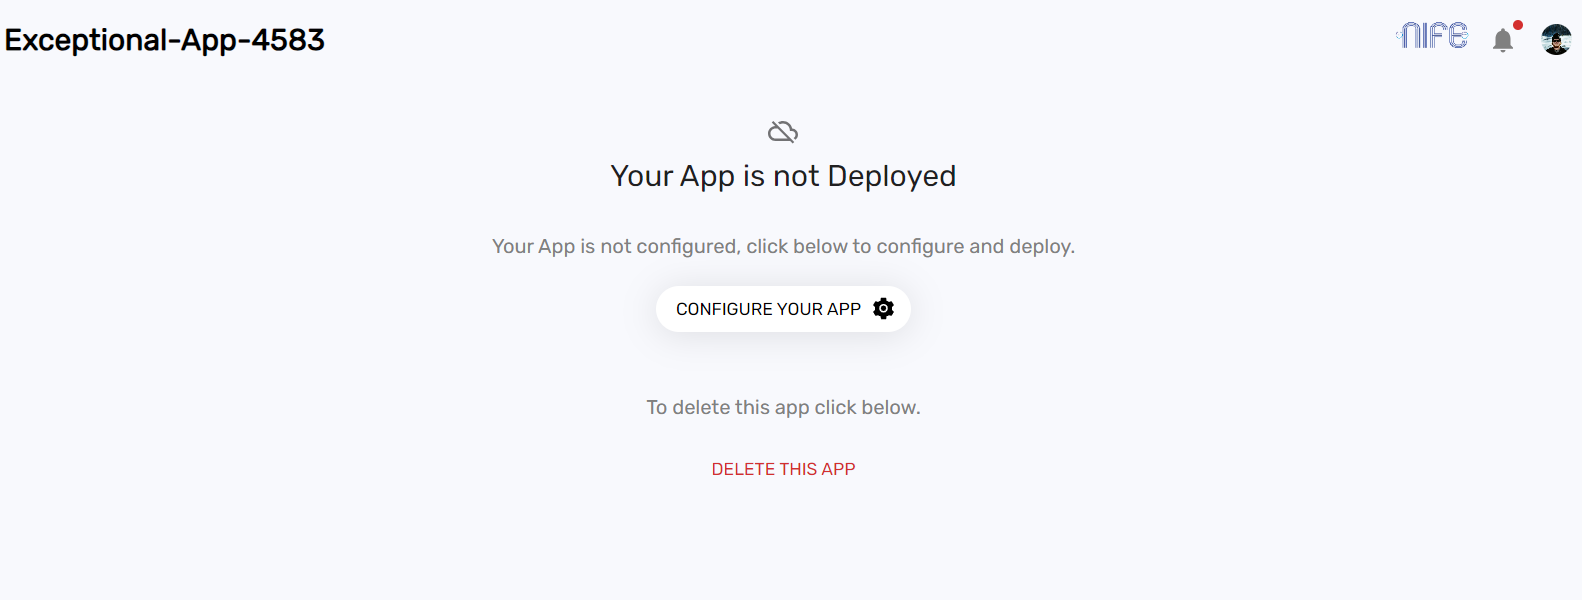 Configure Your App